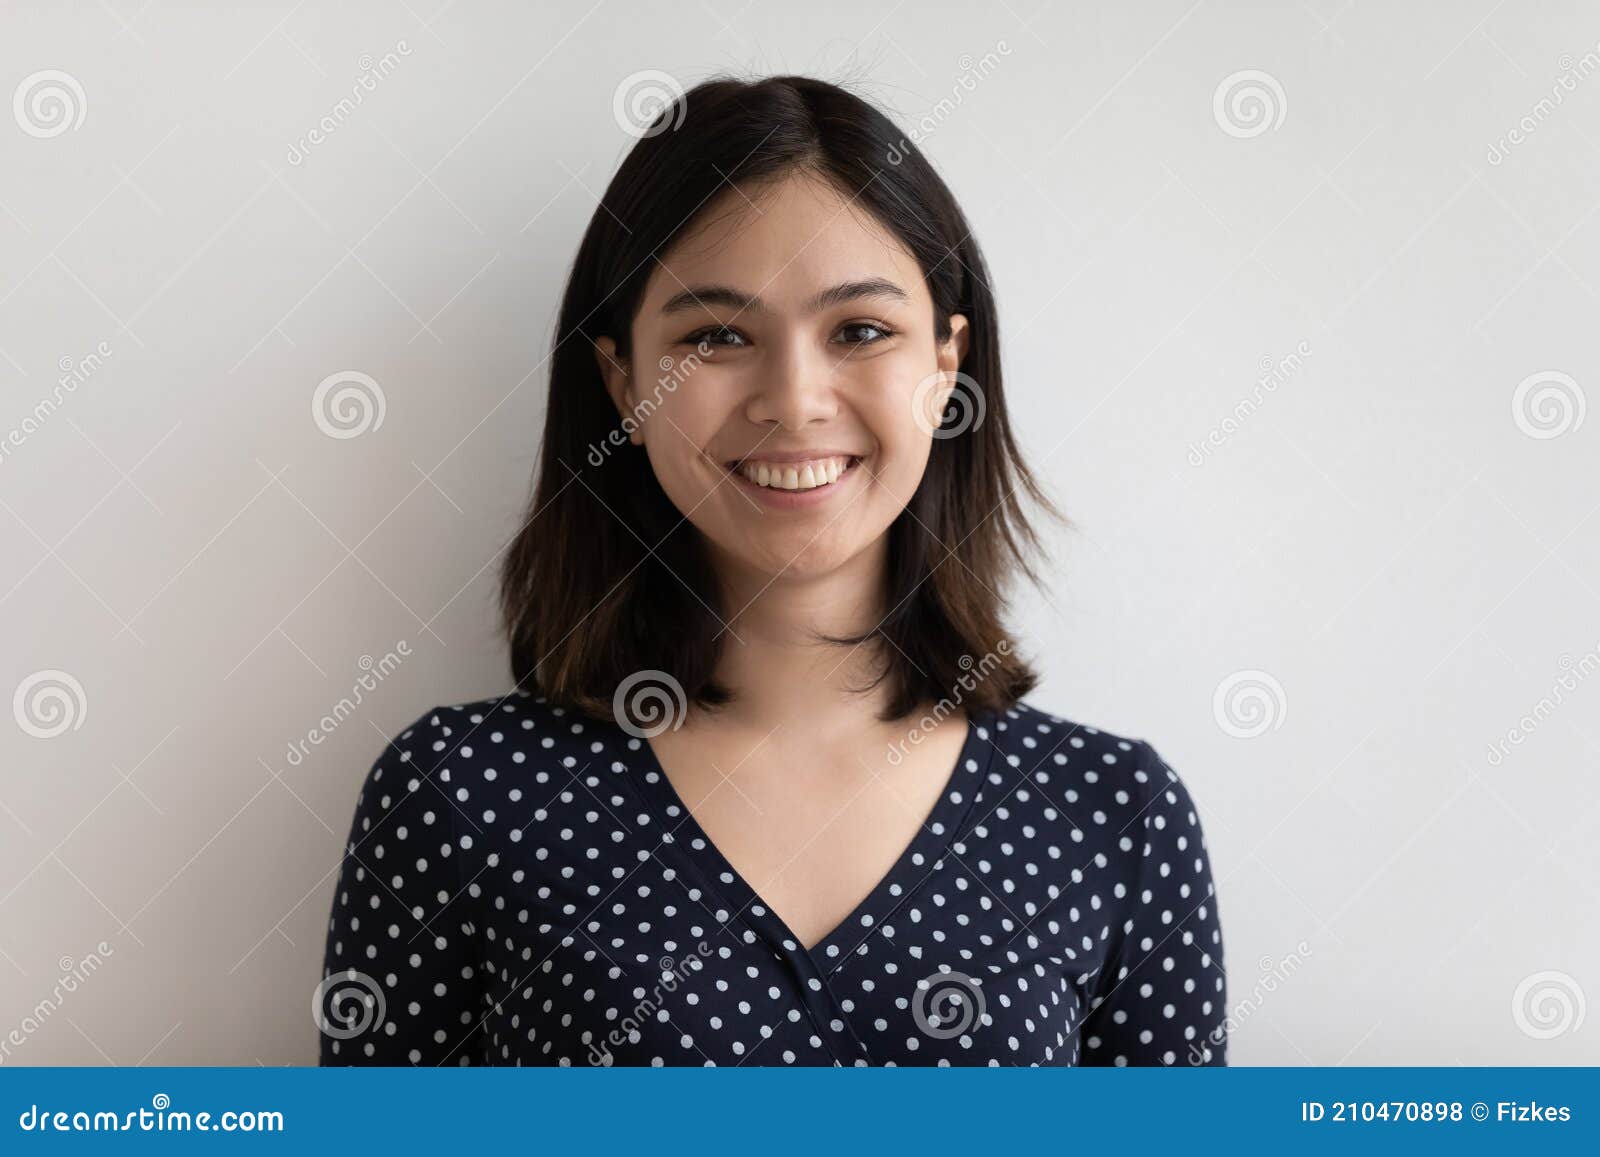 studio headshot portrait of positive young female of asian ethnicity